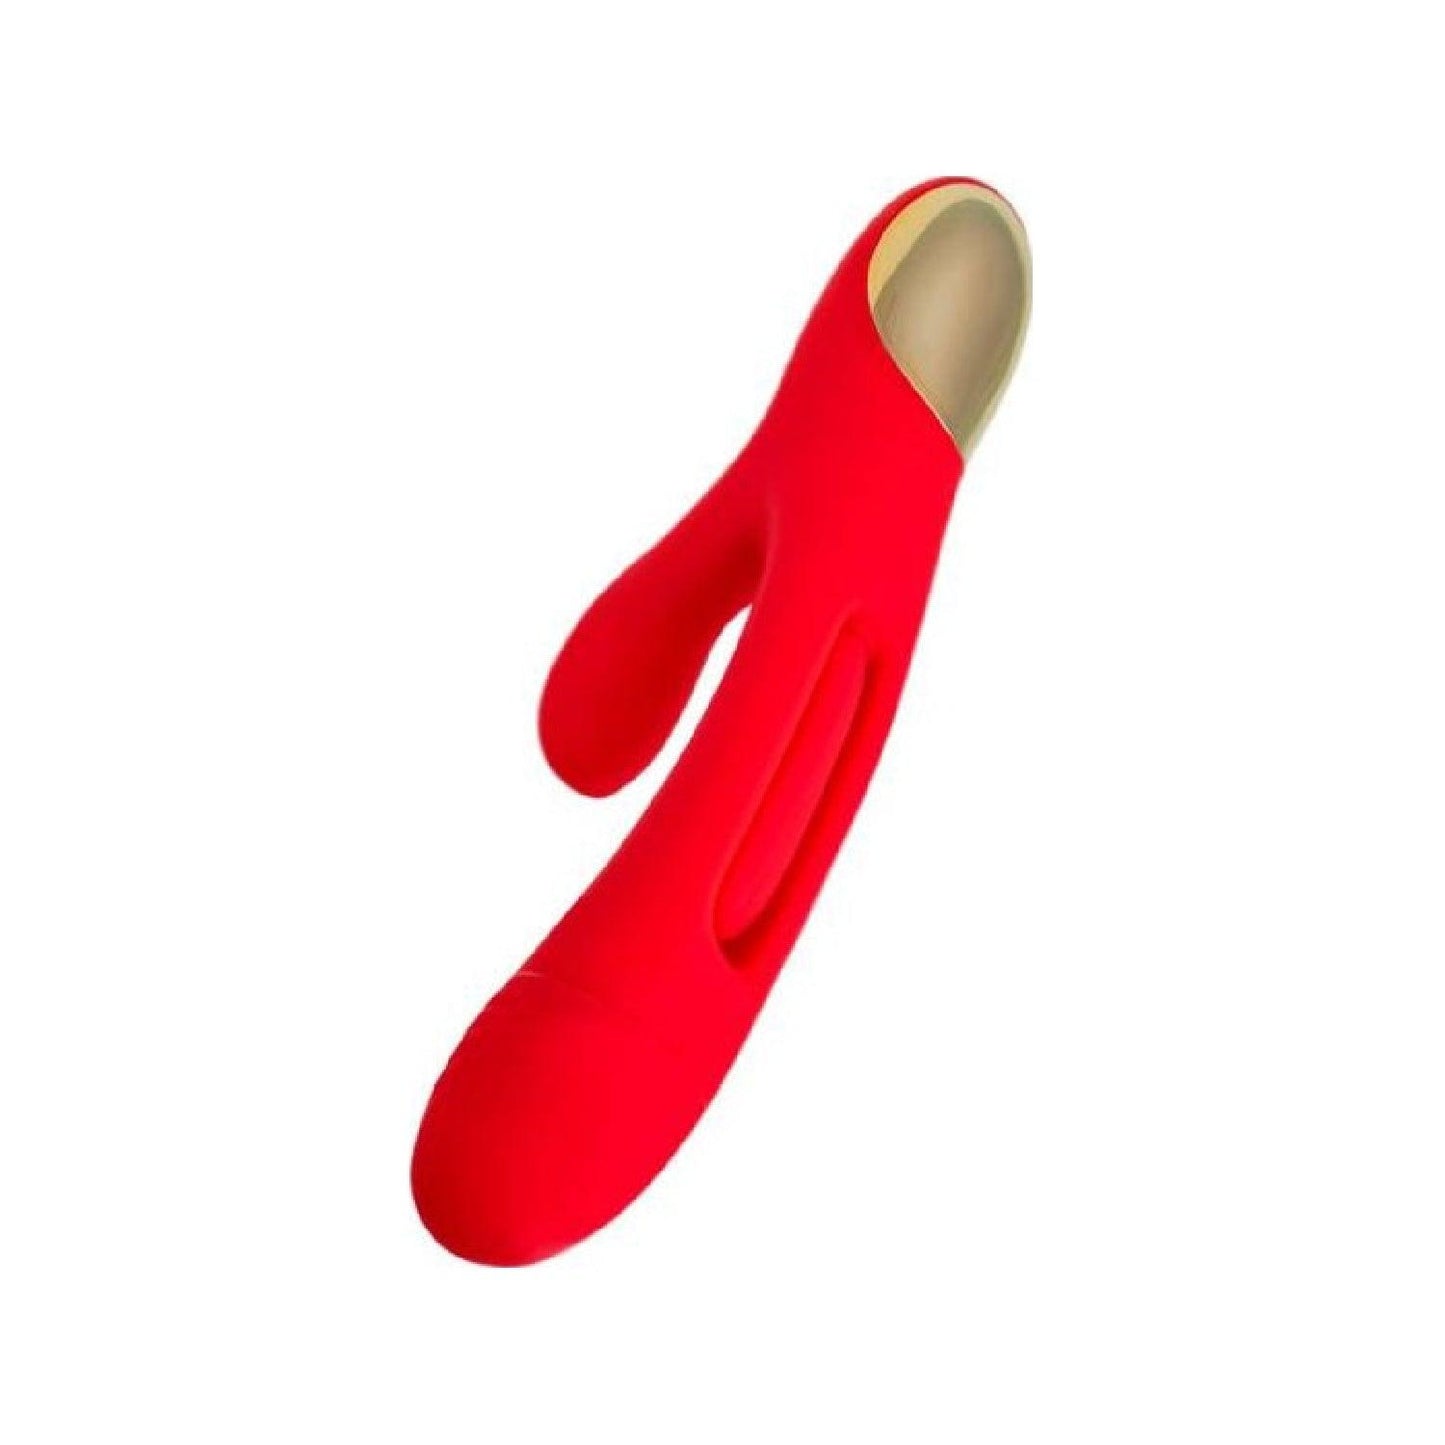 JOS Patti Moving Tongue Rabbit Vibrator Red - Take A Peek